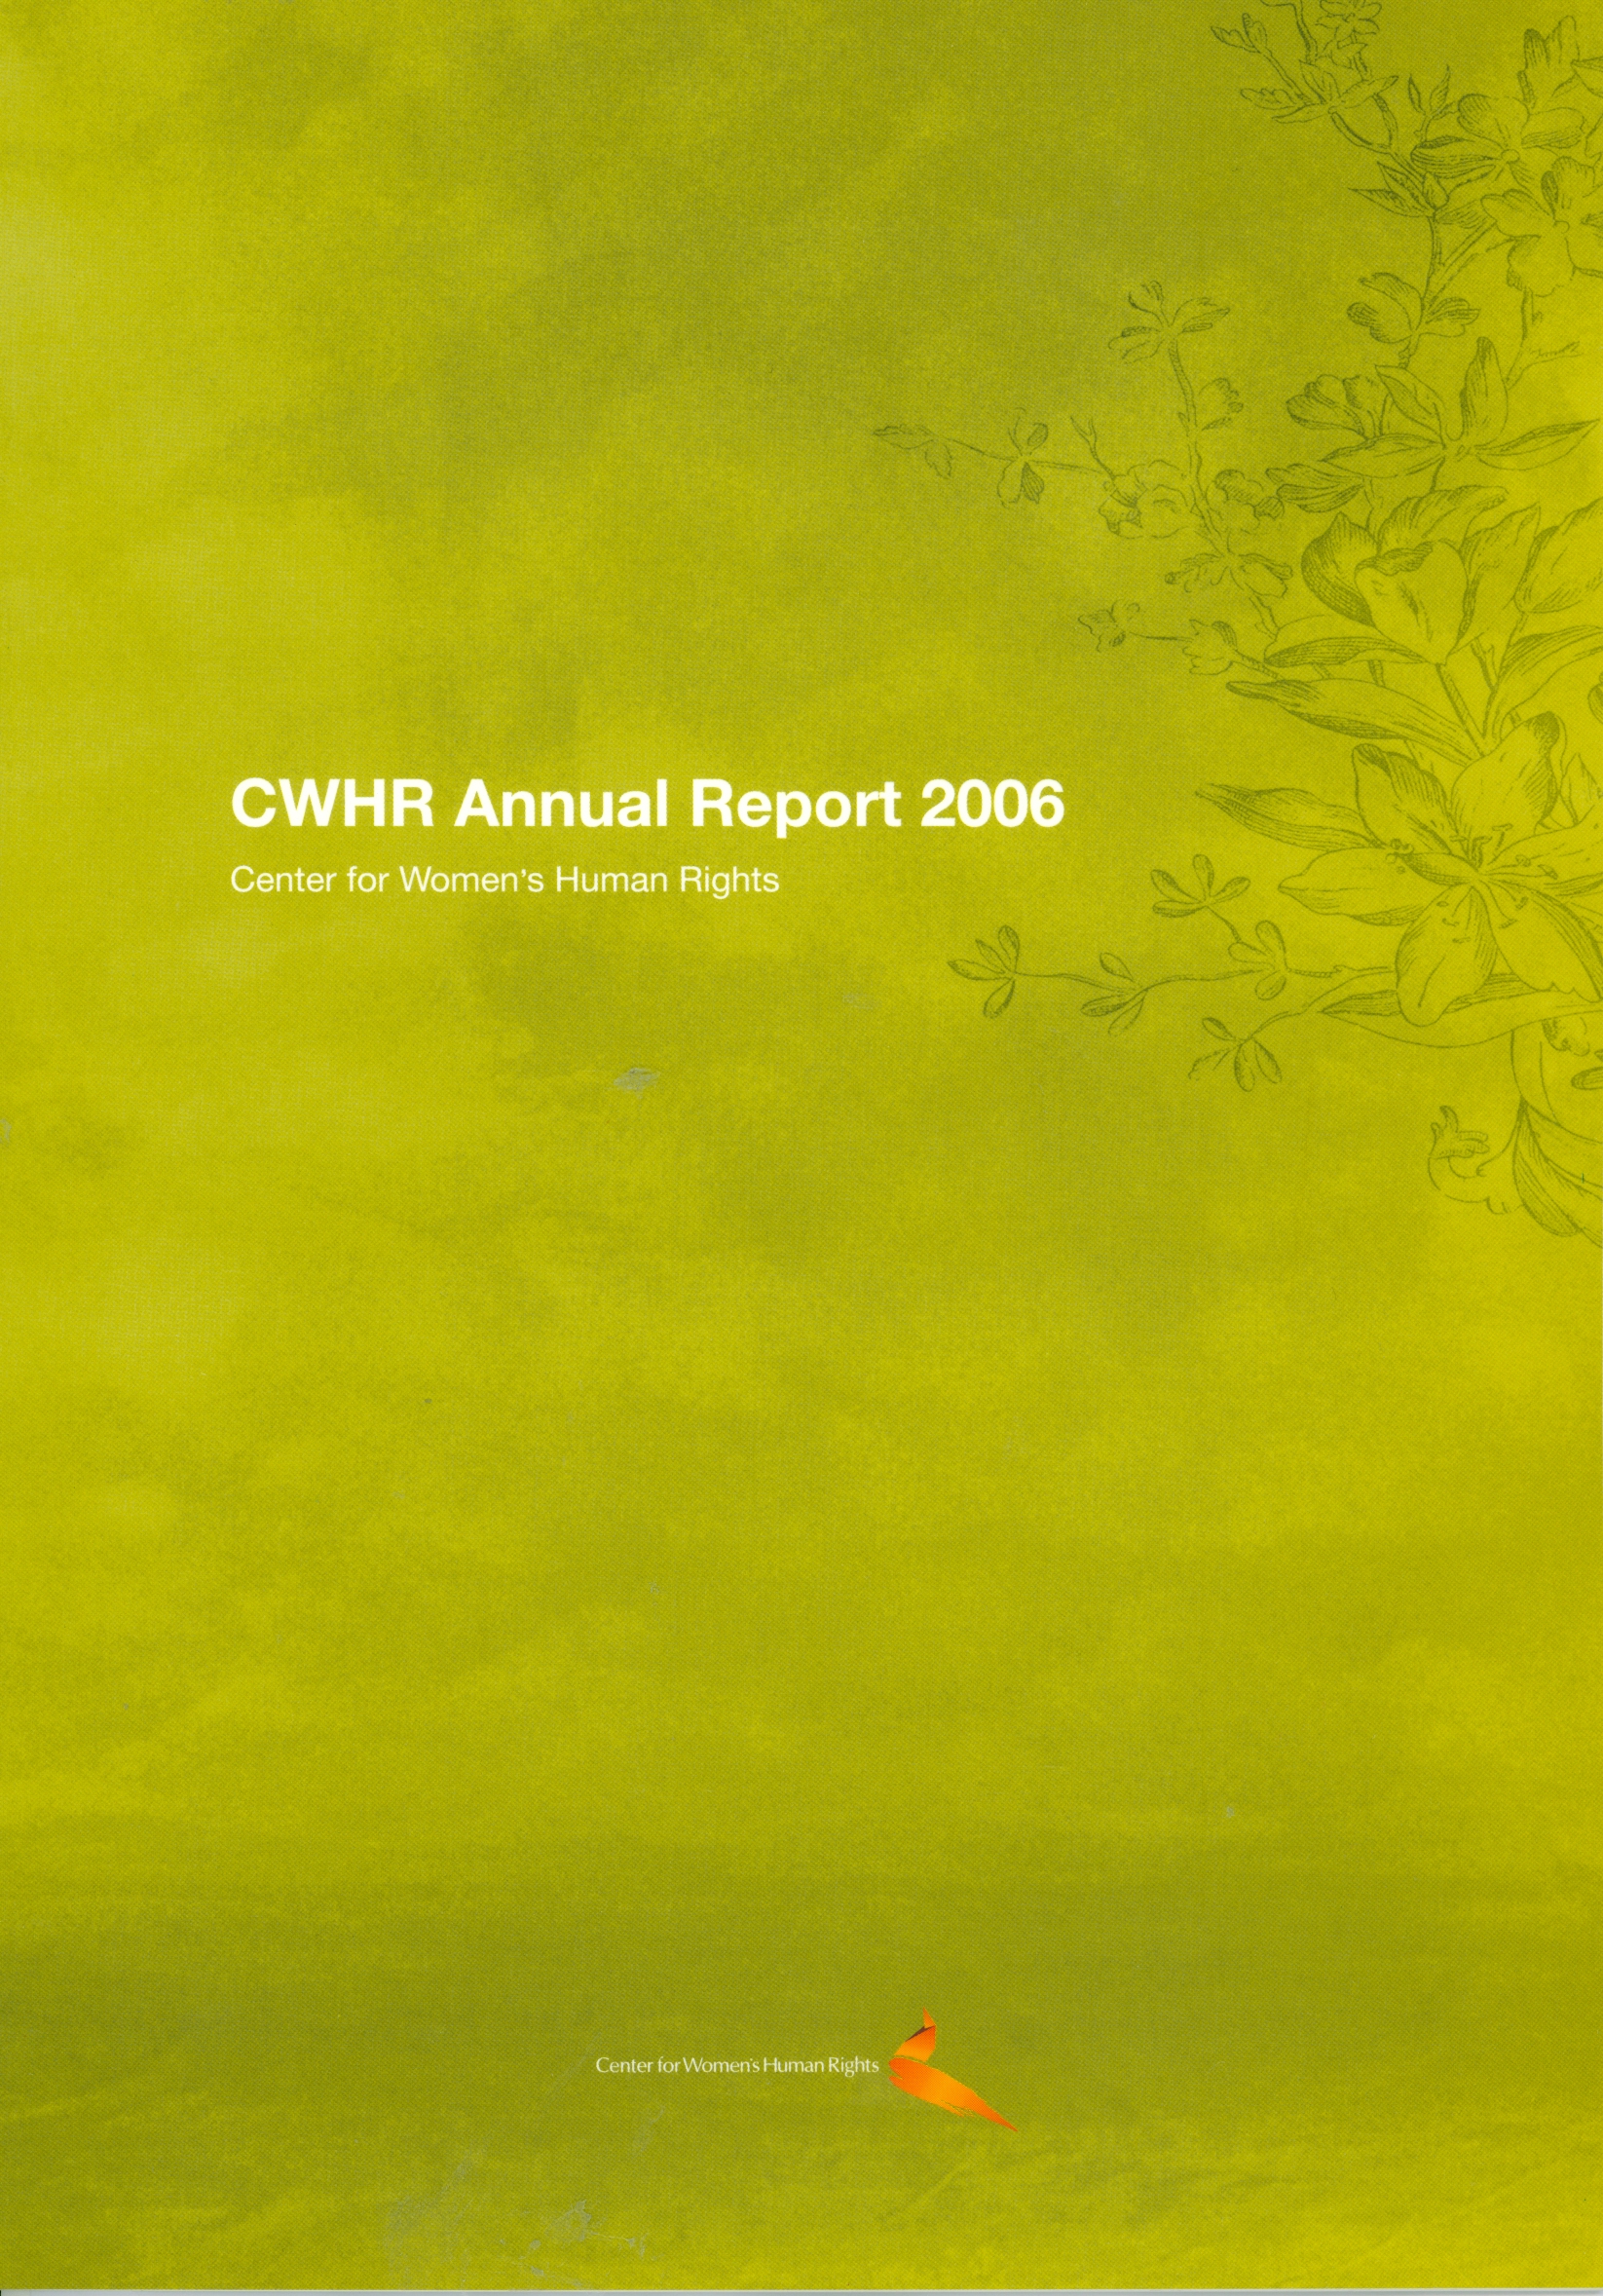 2006 CHWR Annual Report